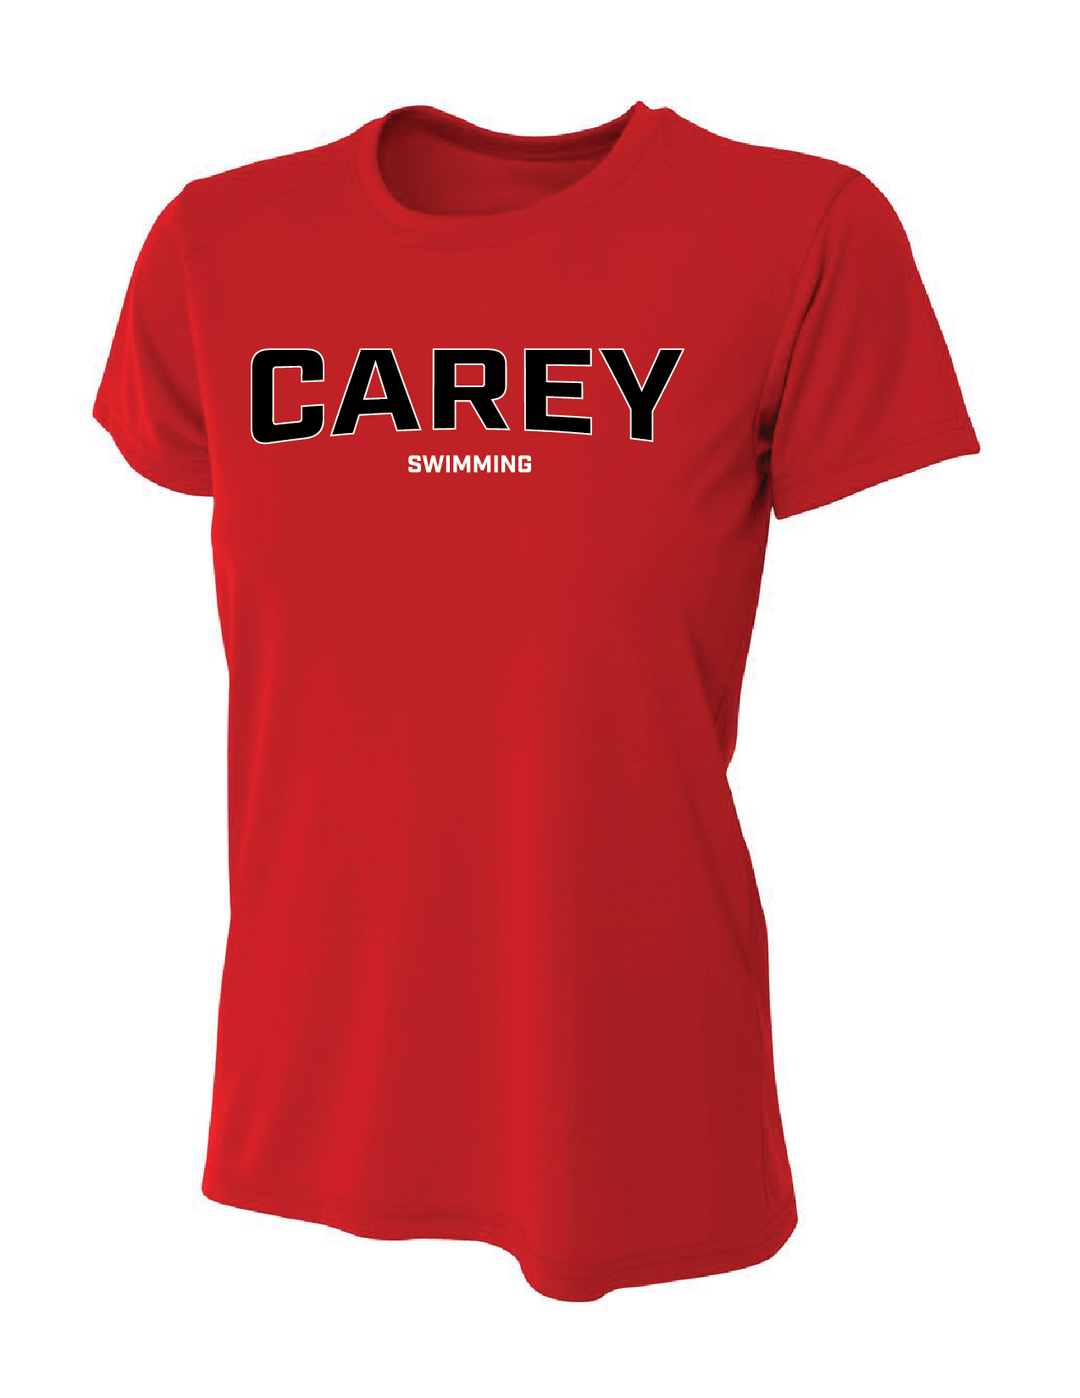 WCU Swimming Women's Short-Sleeve Performance Shirt WCU Swim Red CAREY - Third Coast Soccer